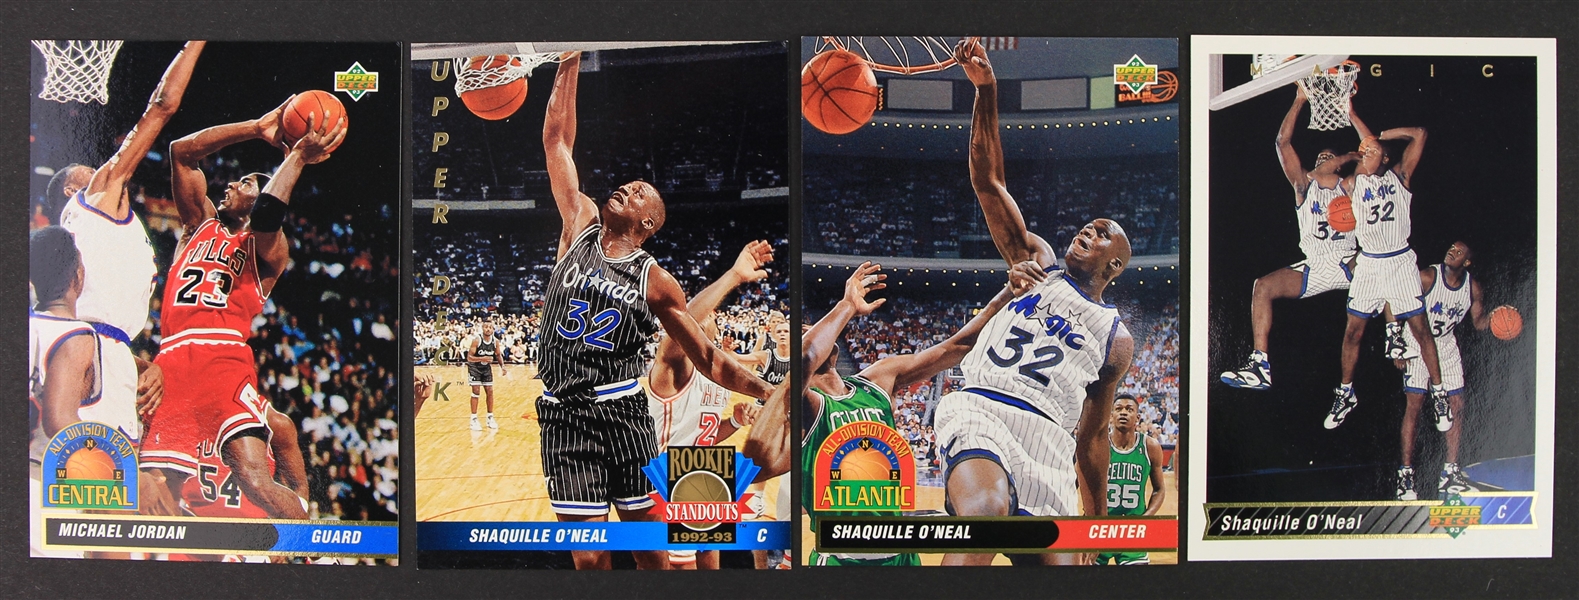 1992-93 Shaquille ONeal Michael Jordan Magic/Bulls Upper Deck Basketball Trading Cards - Lot of 4